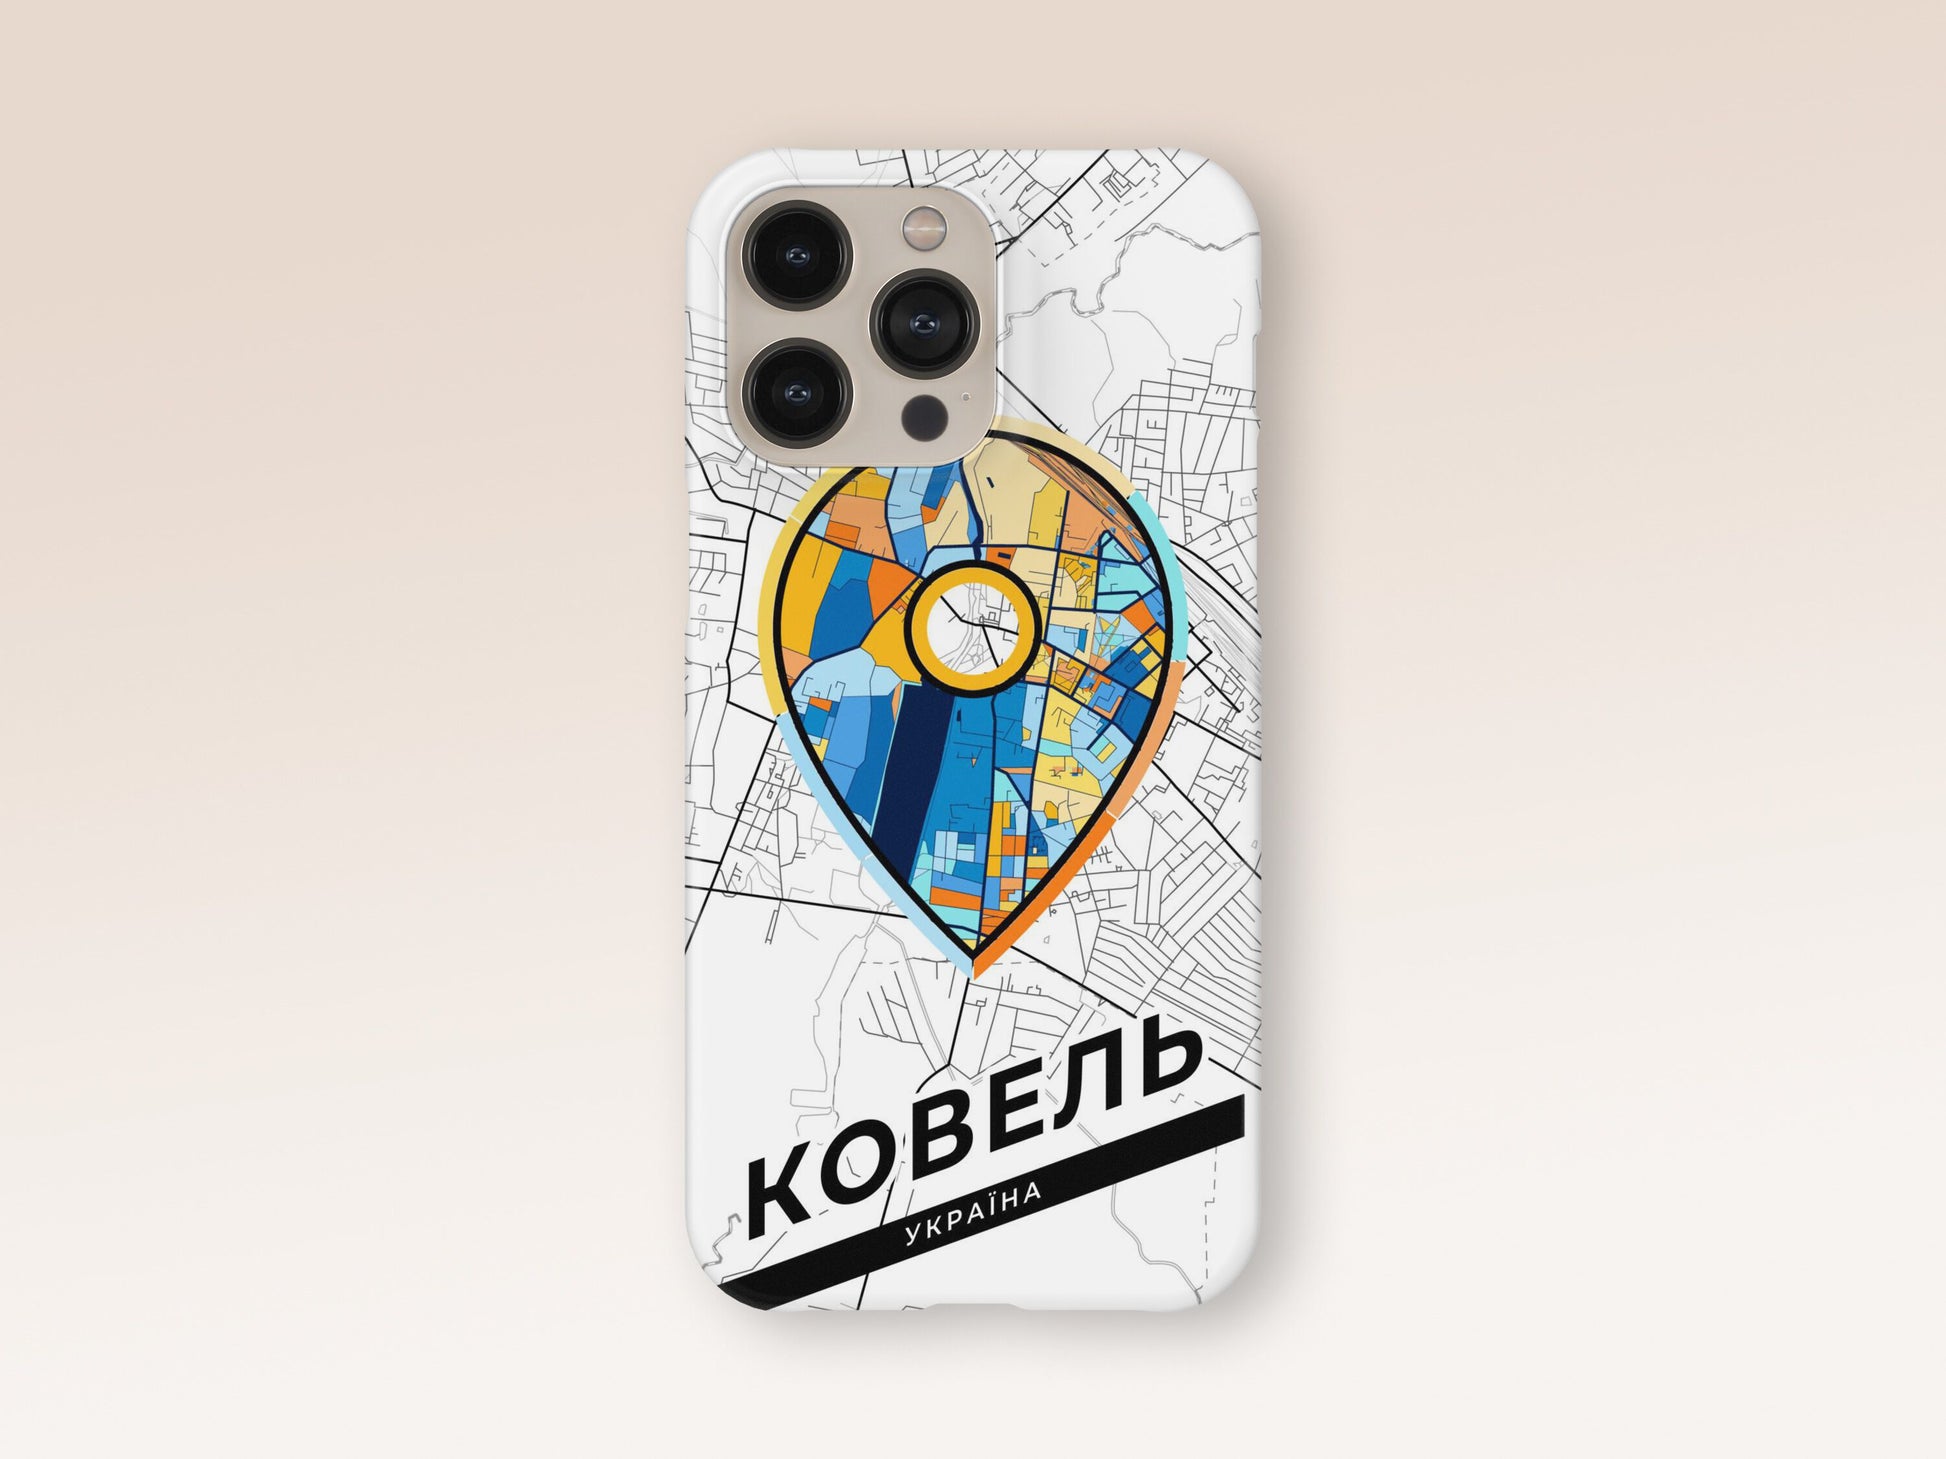 Kovel Ukraine slim phone case with colorful icon. Birthday, wedding or housewarming gift. Couple match cases. 1